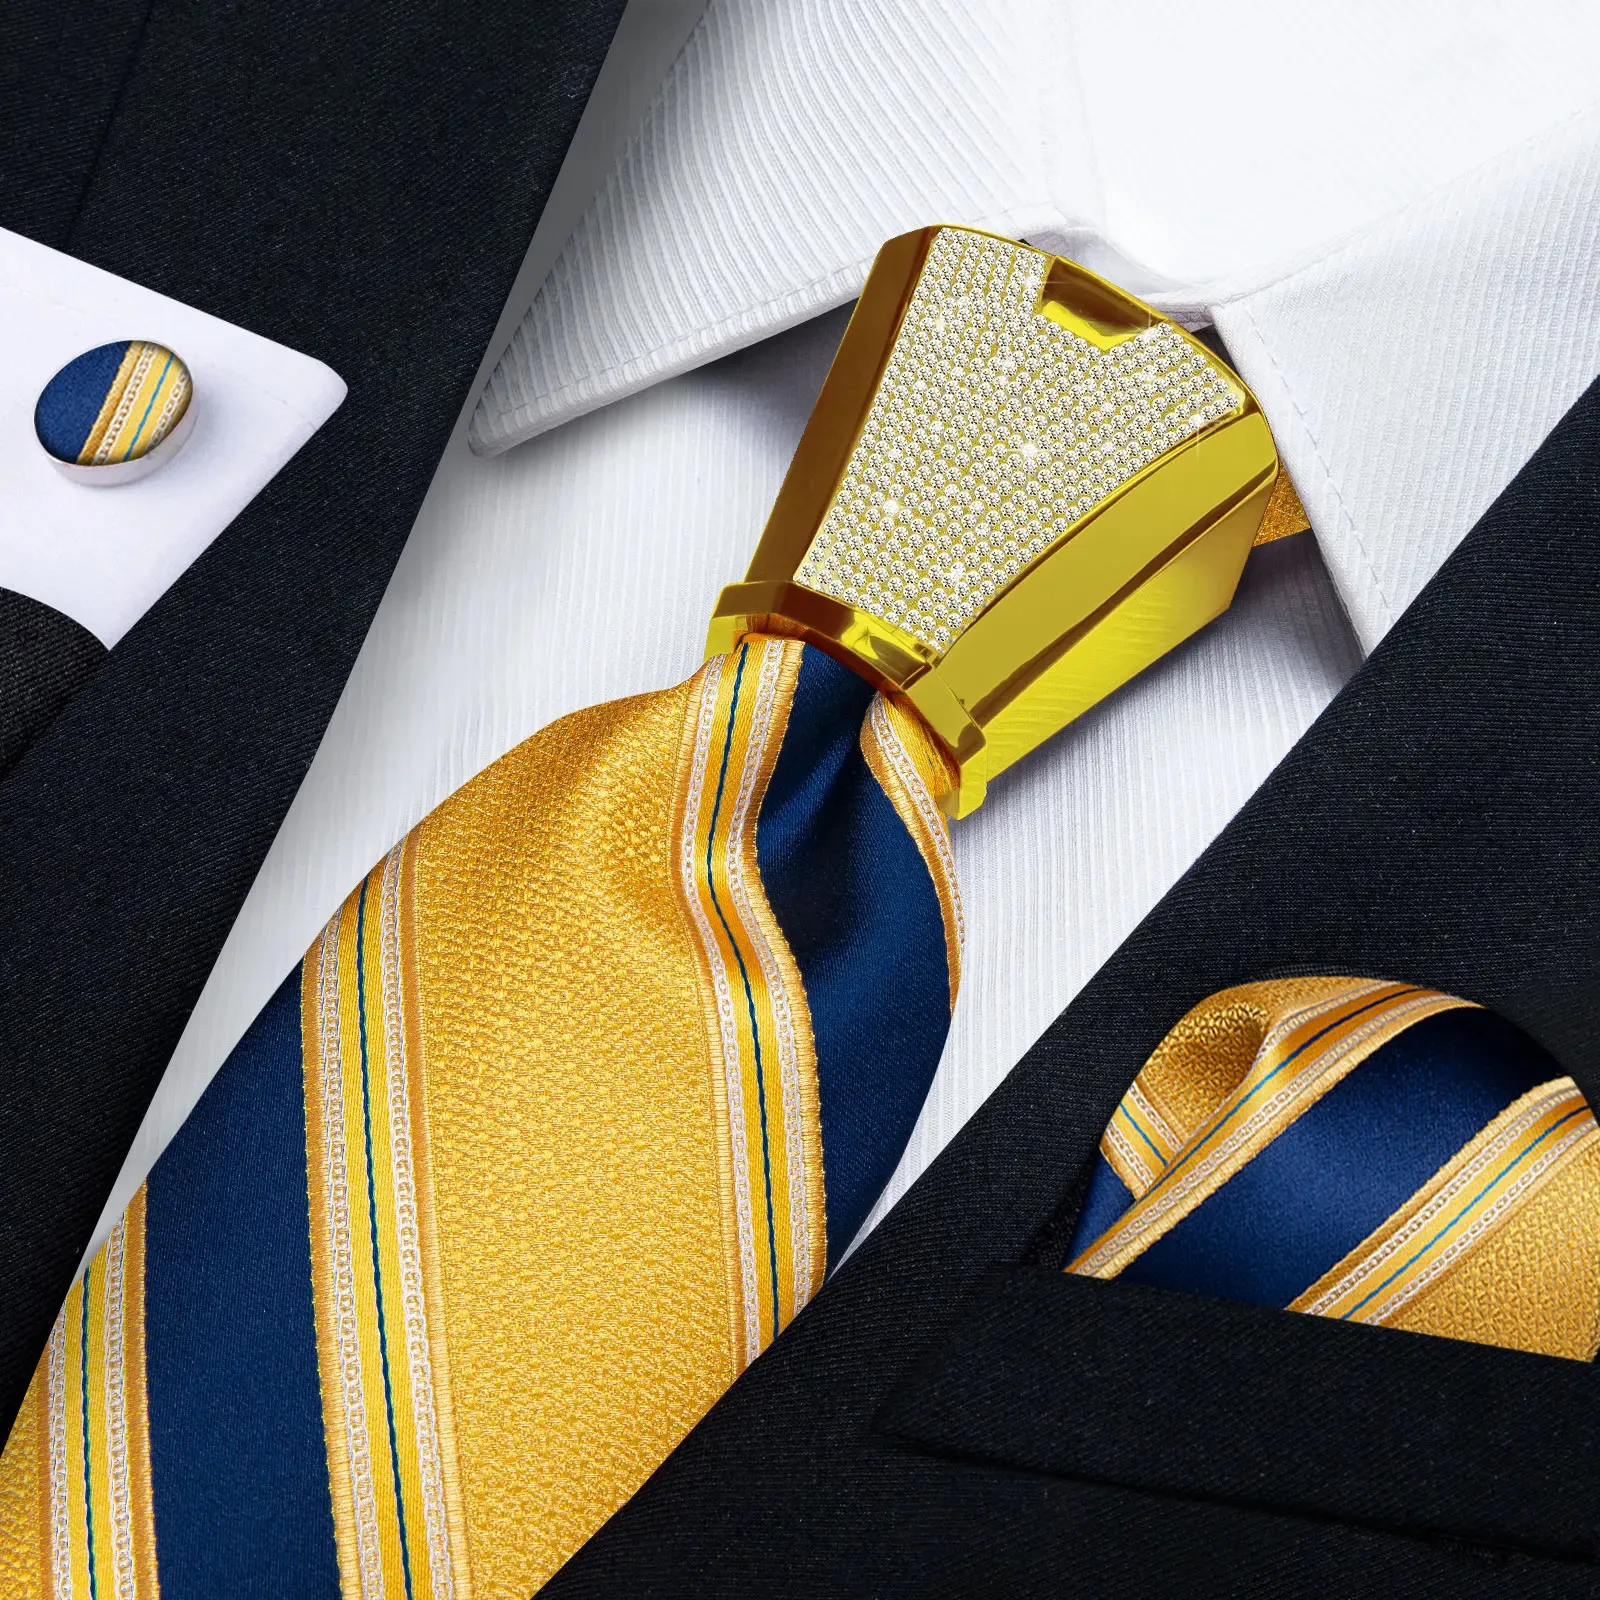 Corbatas de cuello Corbatas a rayas azules y doradas de lujo para hombres Accesorios de boda Gemelos de corbata para hombres Cuadrado de bolsillo Moda Hebilla de corbata plateada Regalo para hombres 231013